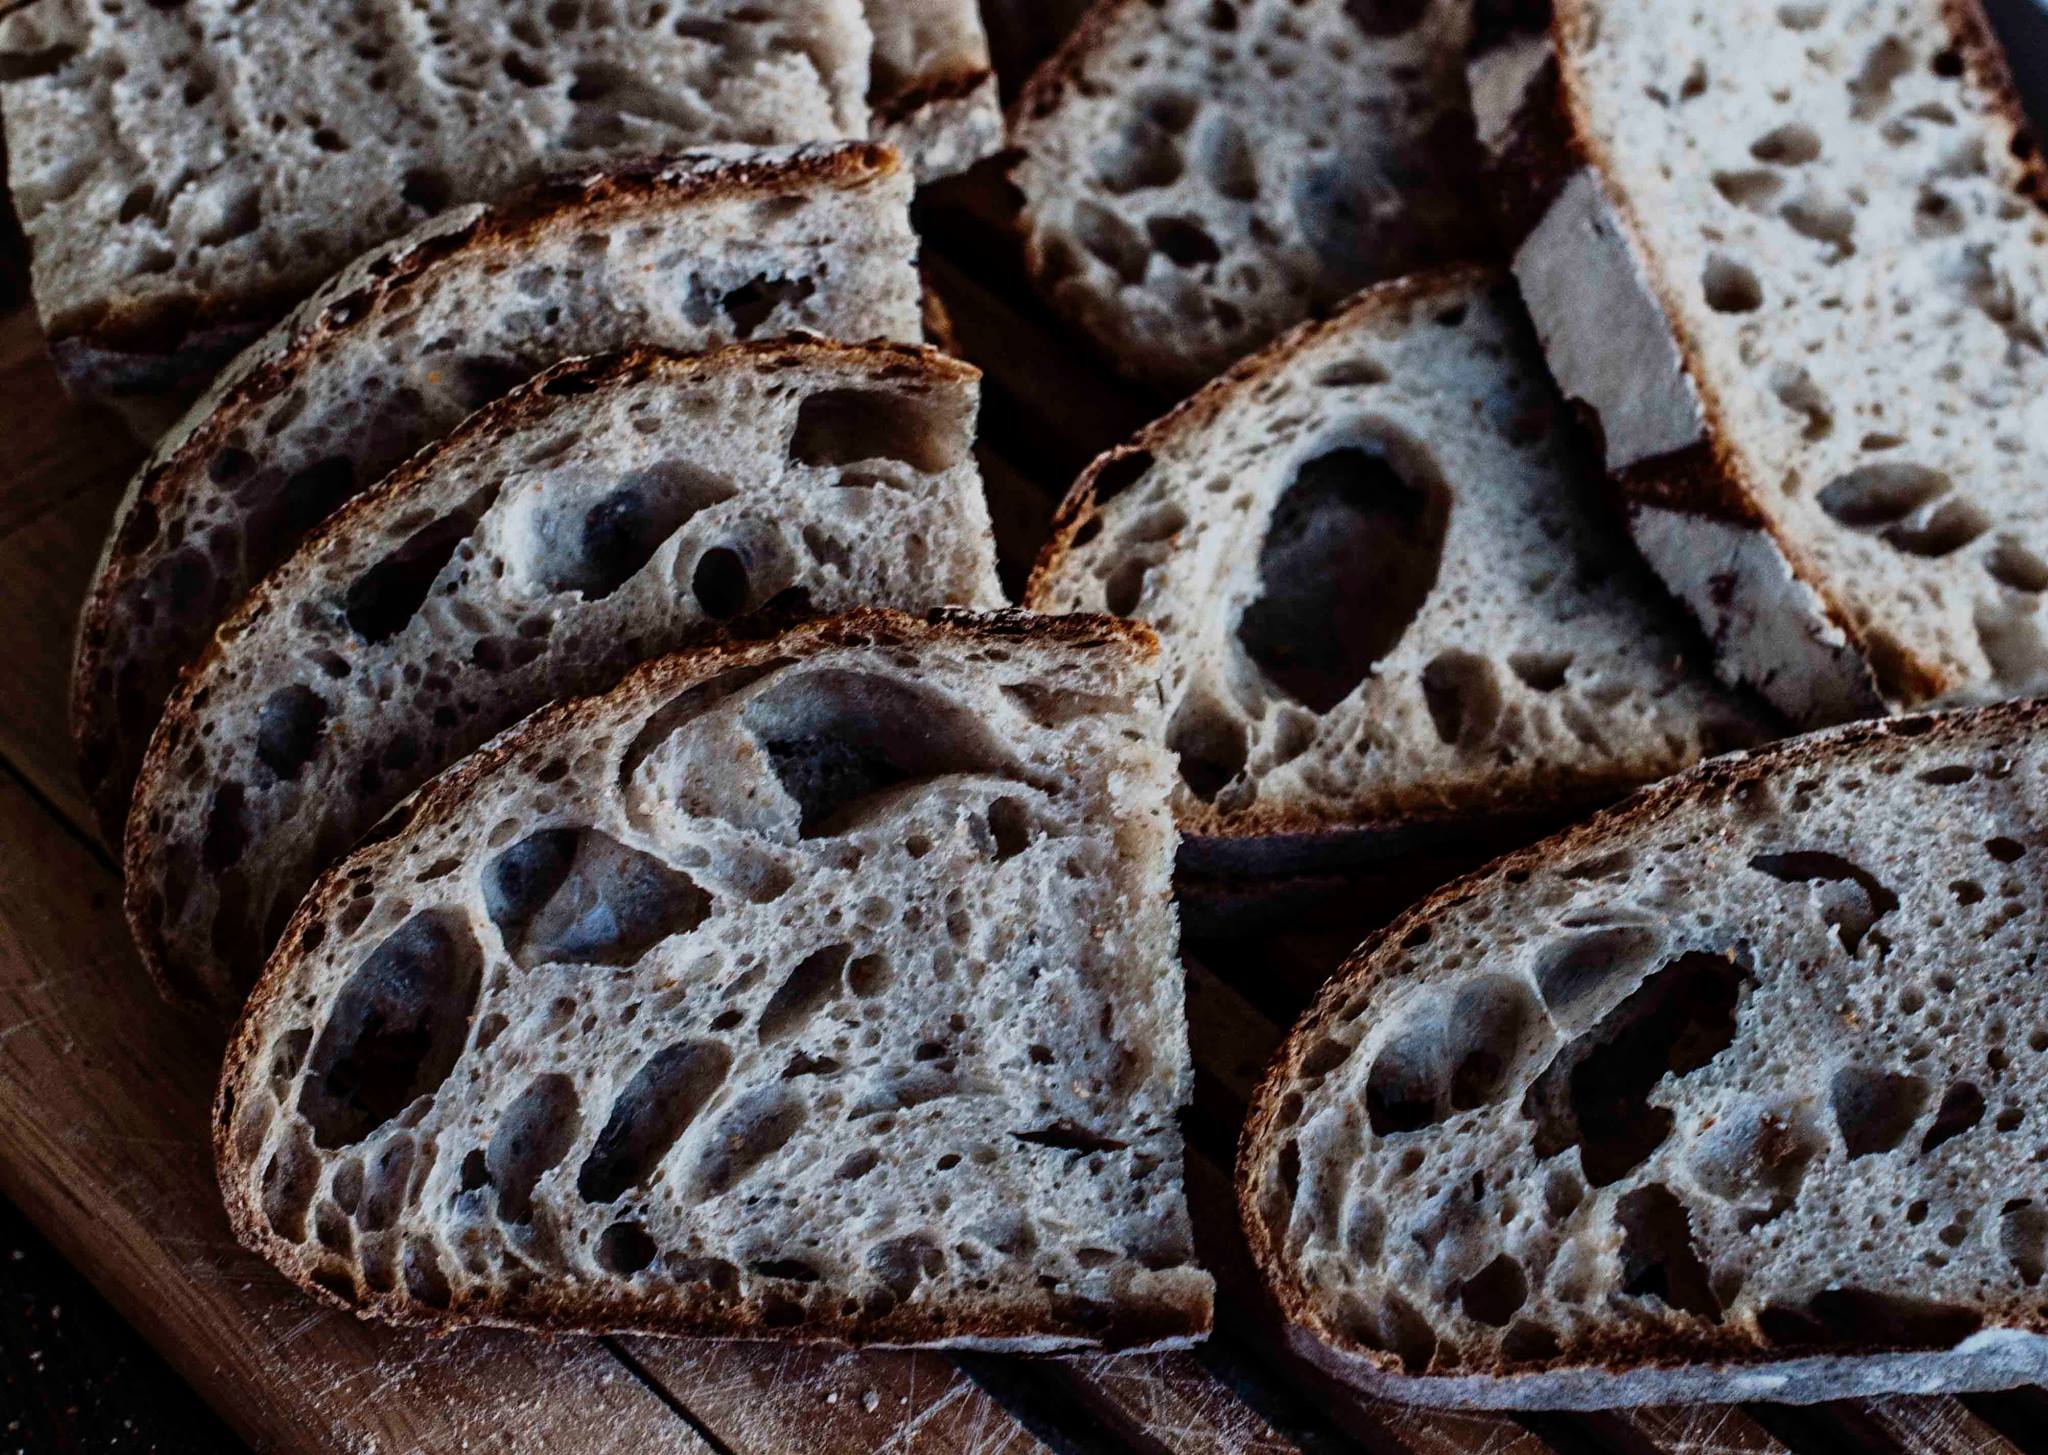 http://breadandcompanatico.com/wp-content/uploads/2014/05/holey-bread.jpg